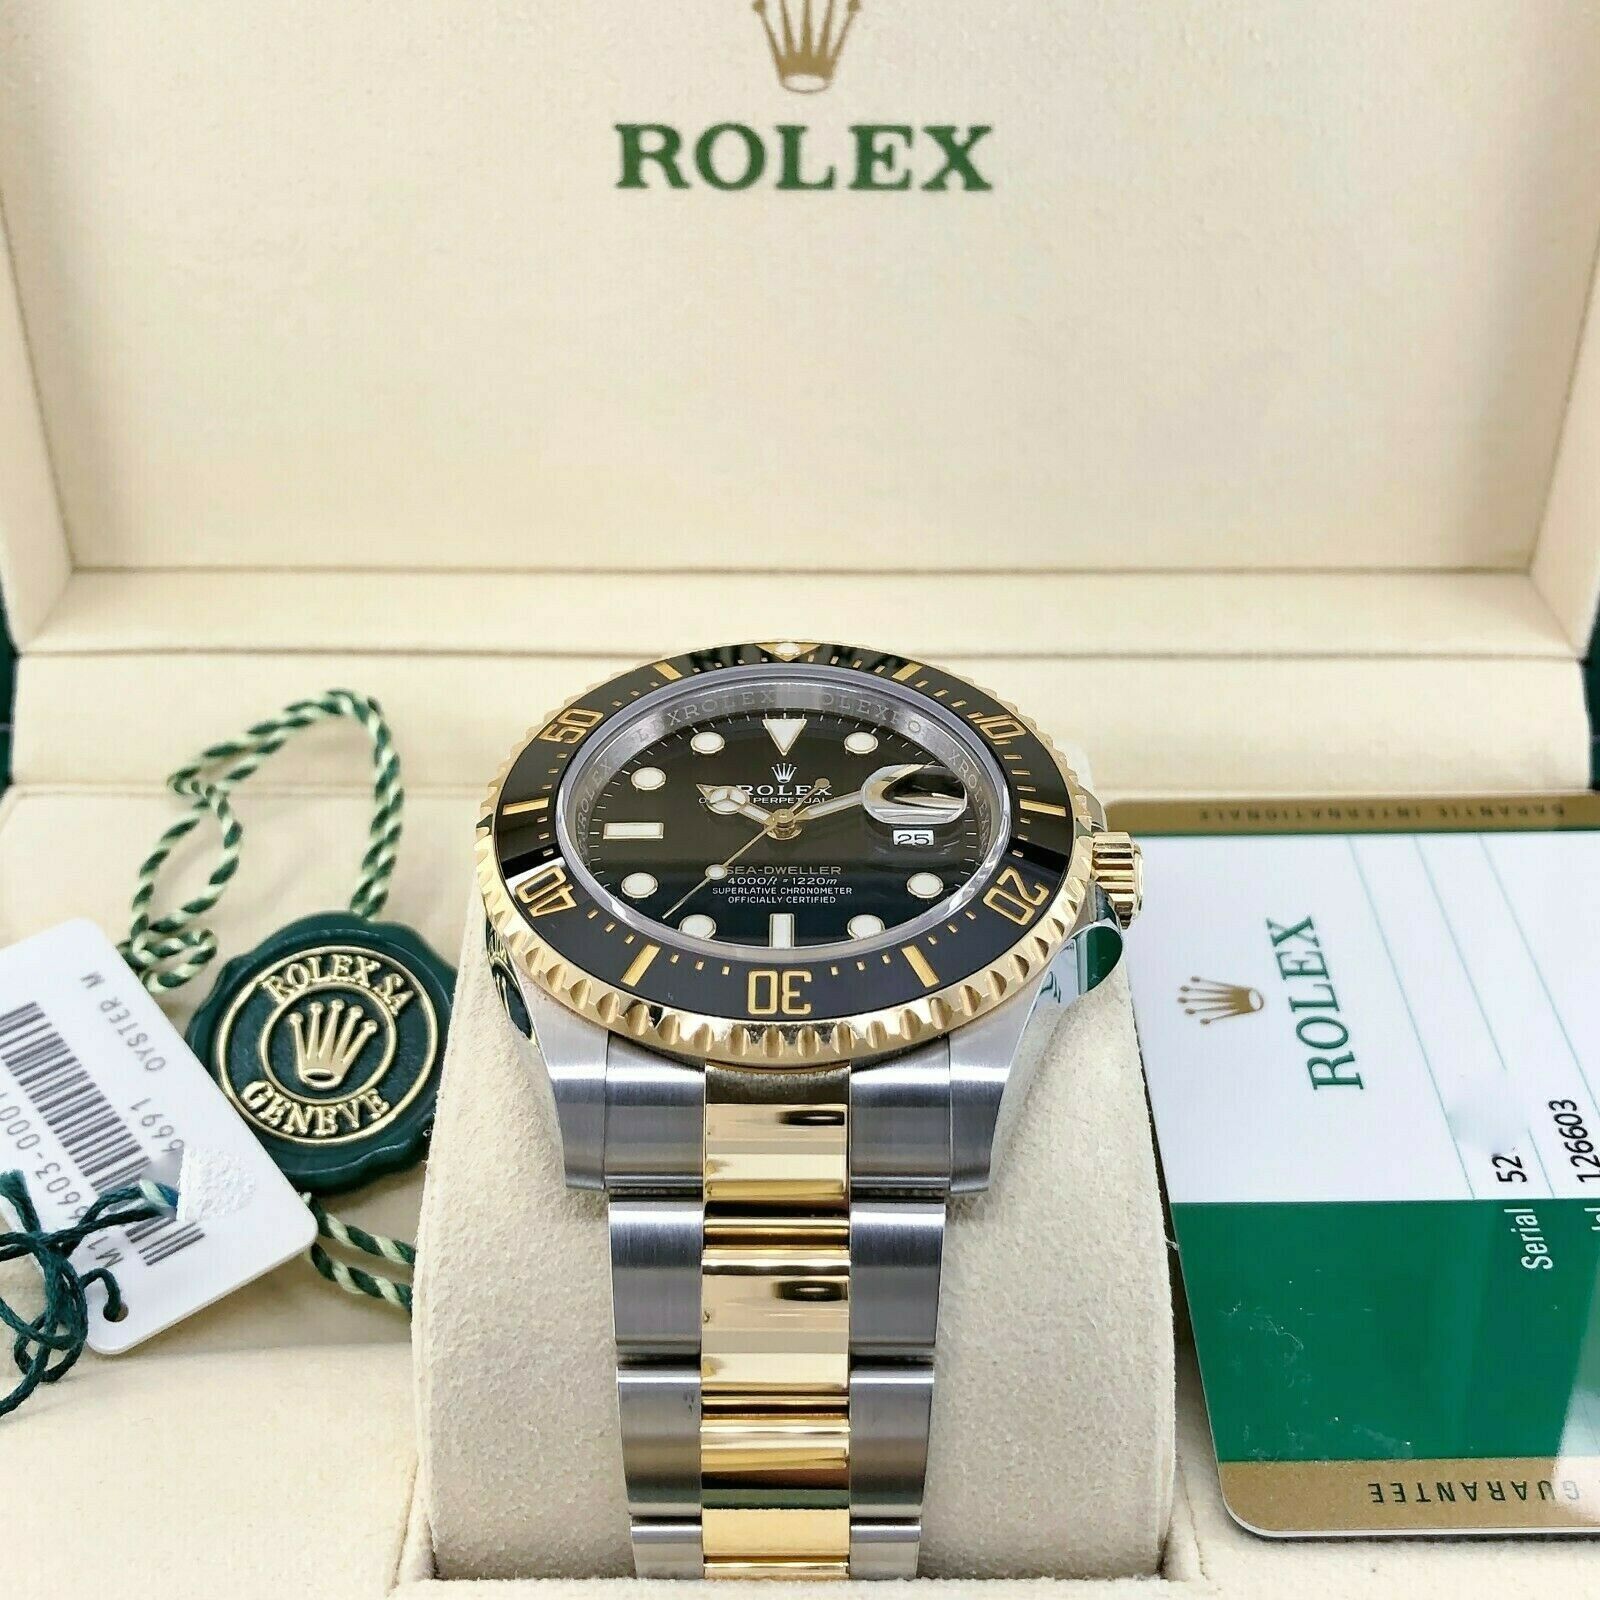 Rolex Sea Dweller 43mm Ceramic 18K Gold Stainless Watch Ref 126603 Box Card 2019